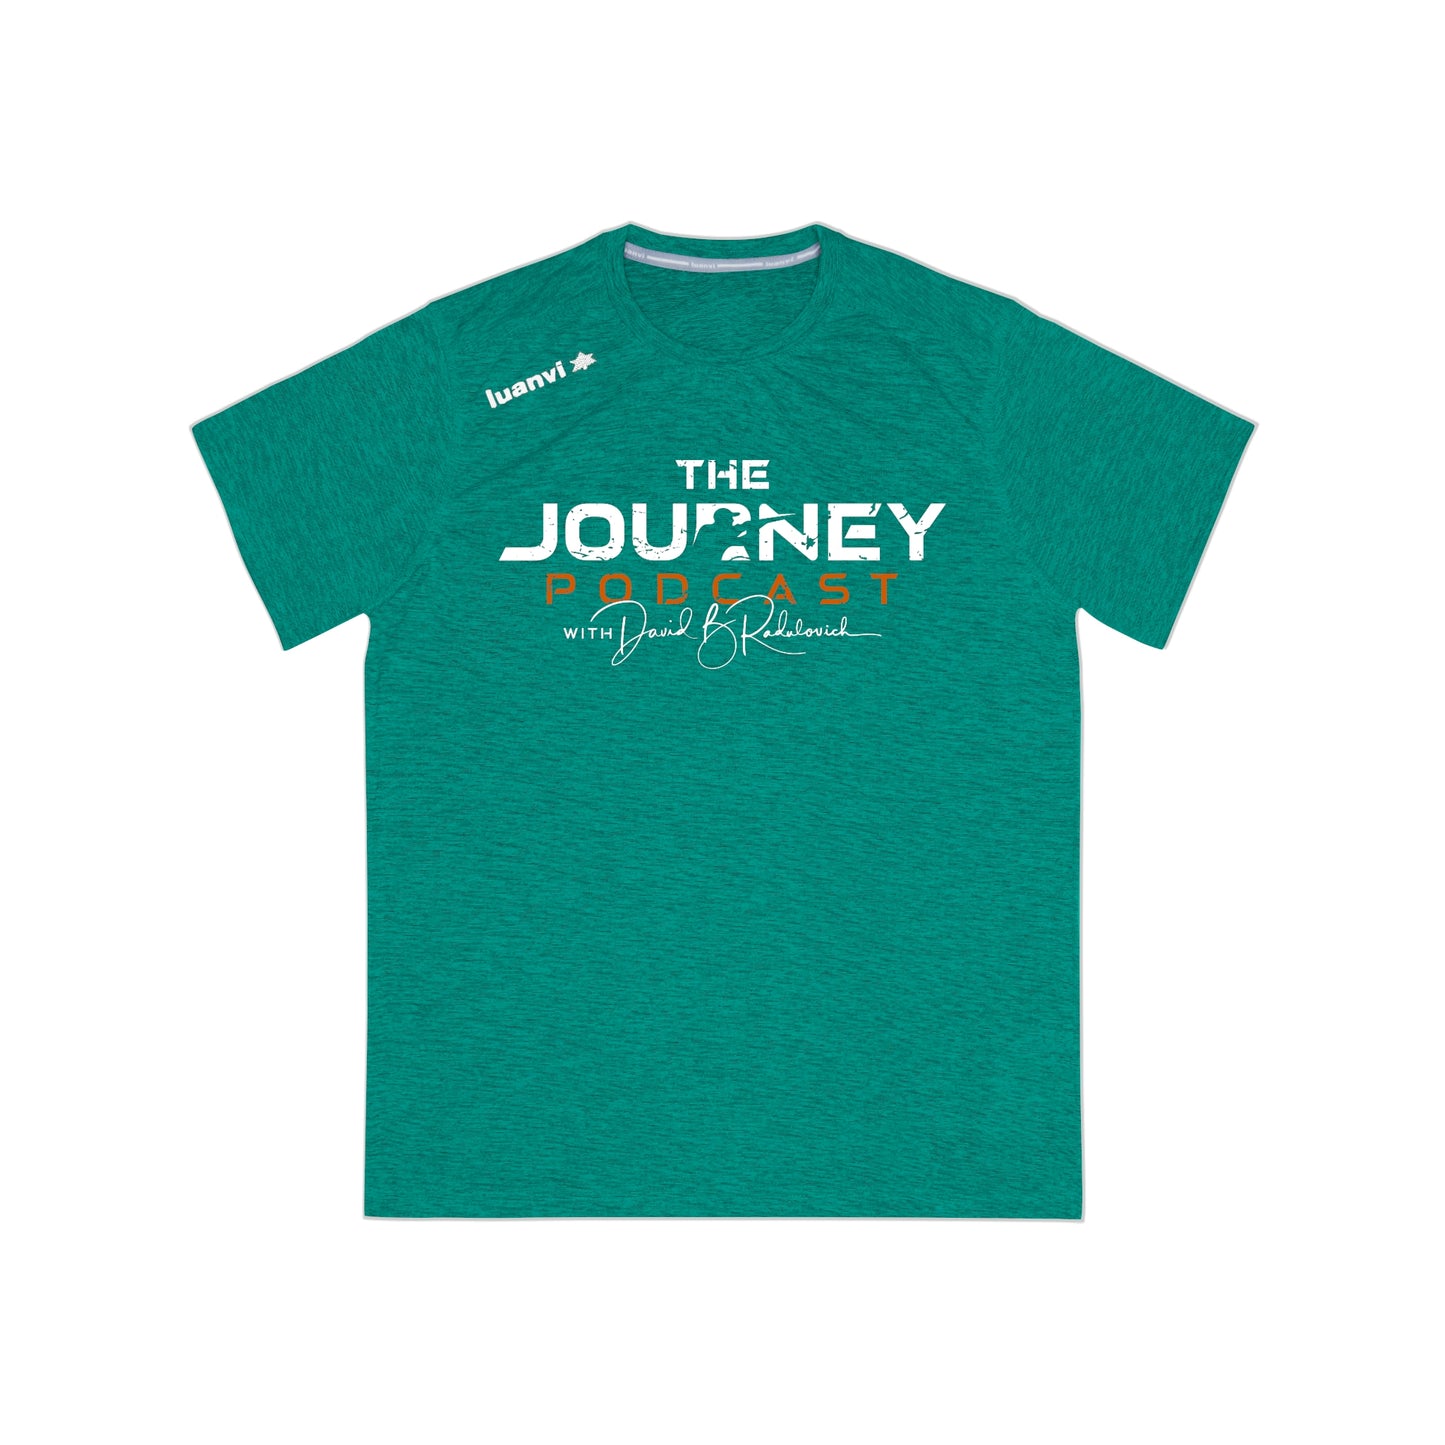 Journey Podcast - Shooting Athletic Shirt